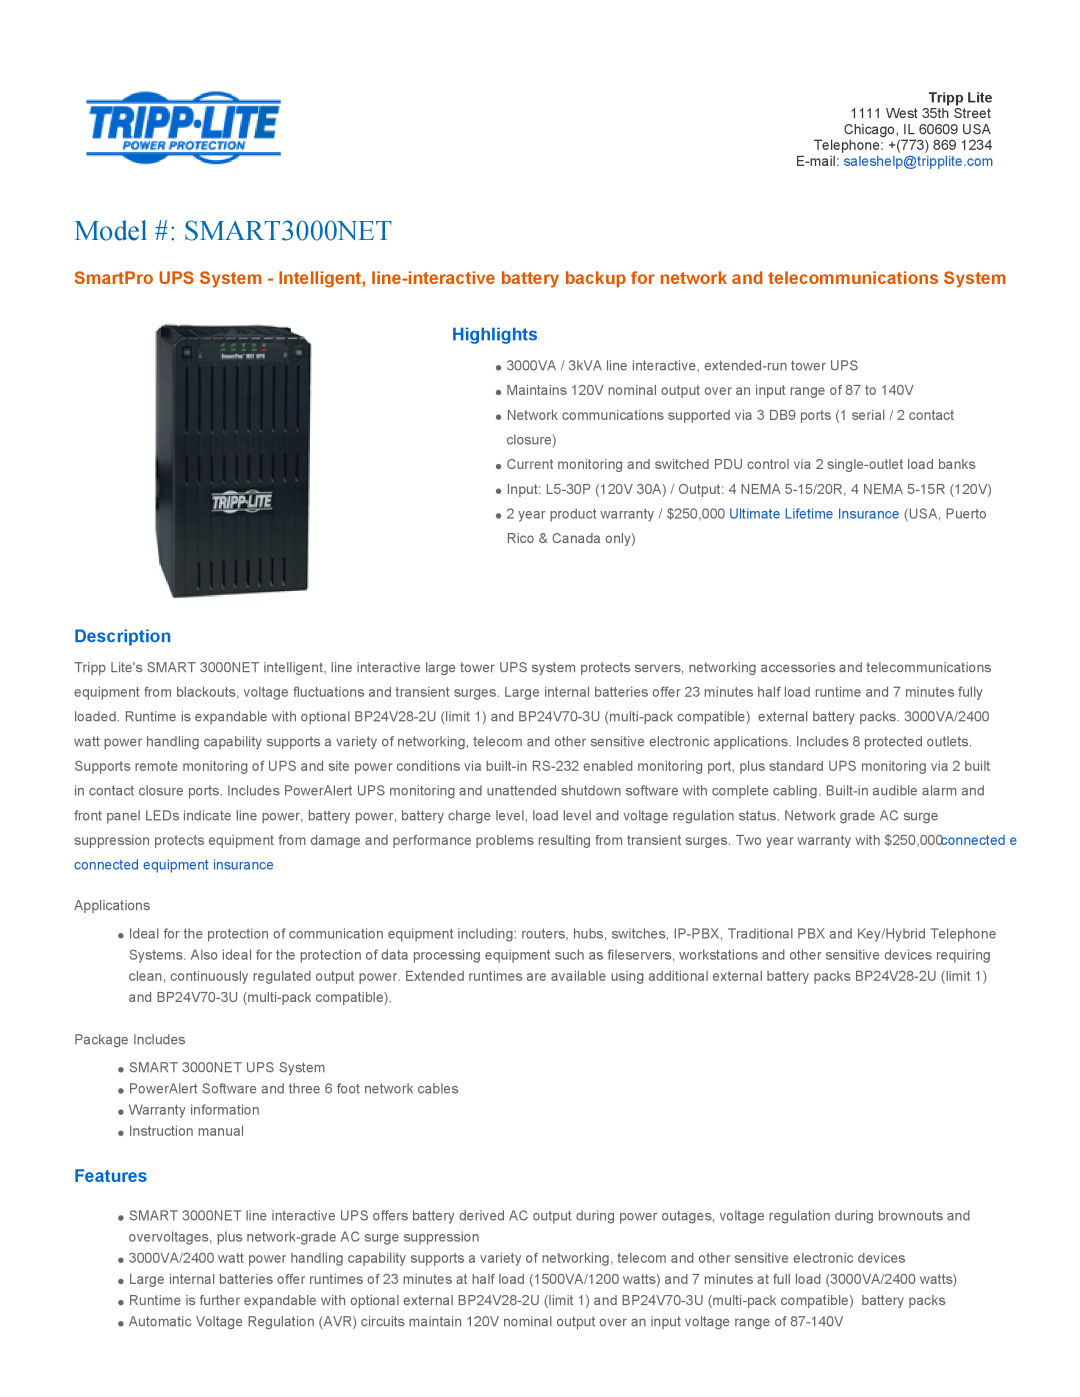 Tripp Lite warranty Highlights, Description, Features, Model # SMART3000NET, connected equipment insurance 